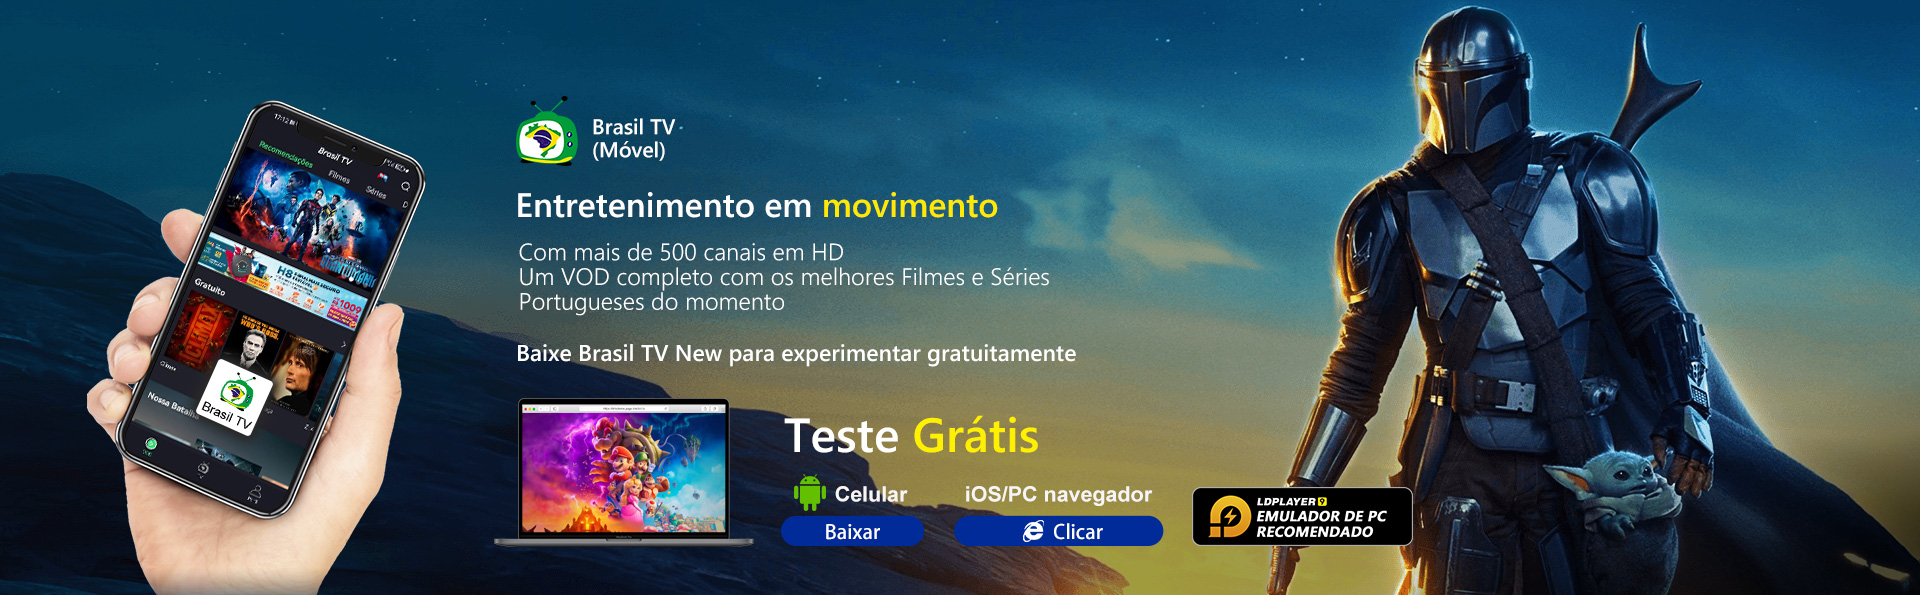 BrasilTV Mobile